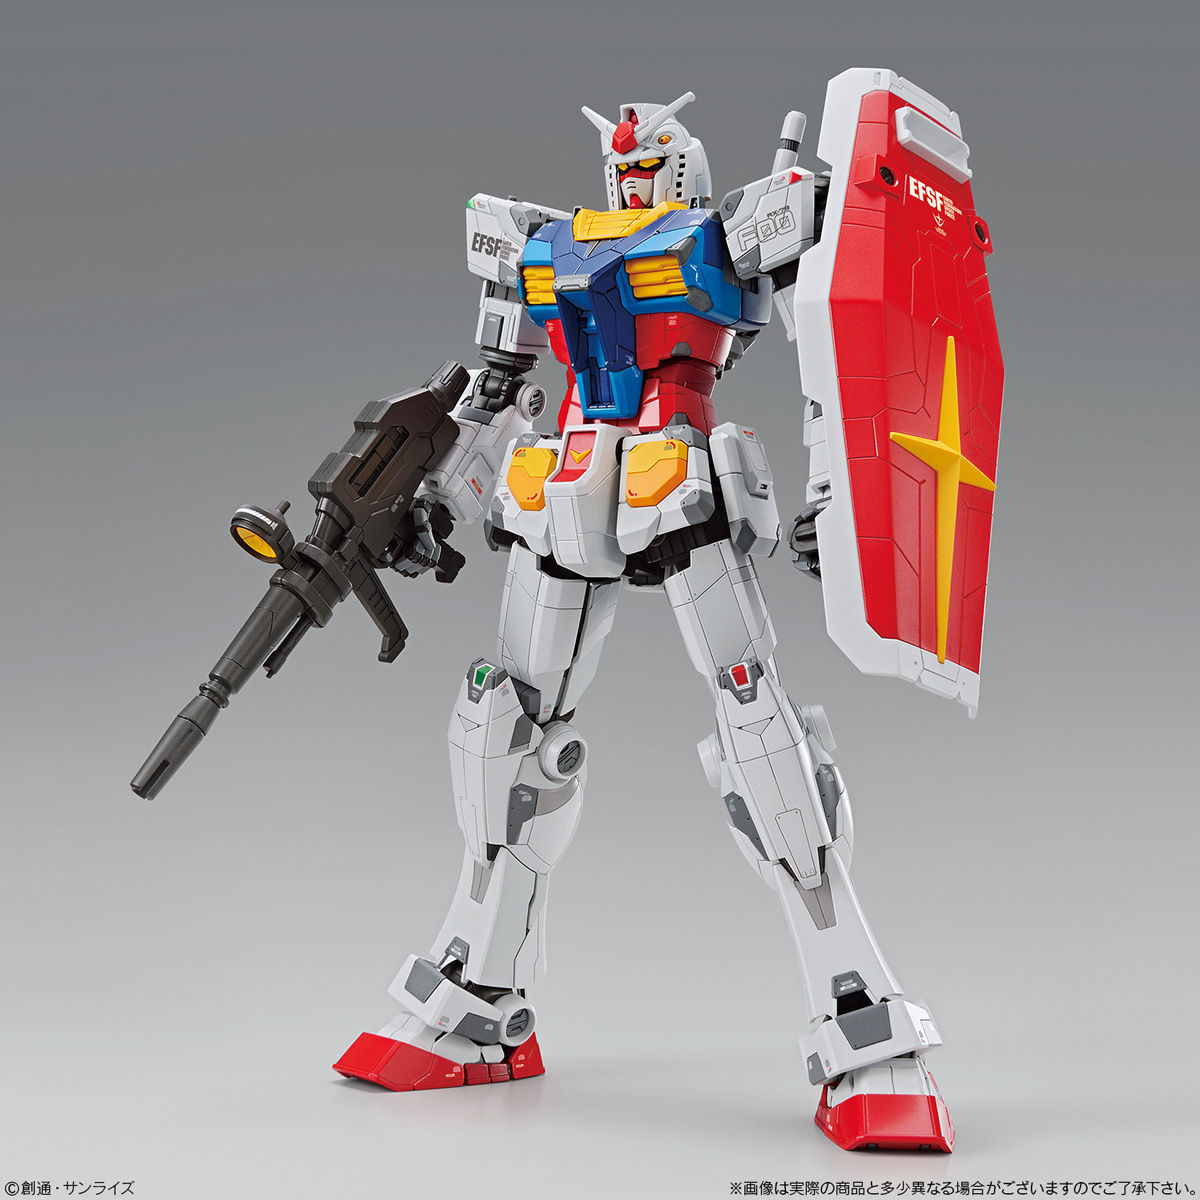 BANDAI Chogokin GUNDAM FACTORY YOKOHAMA RX-78F00 Gundam Limited JAPAN 2020